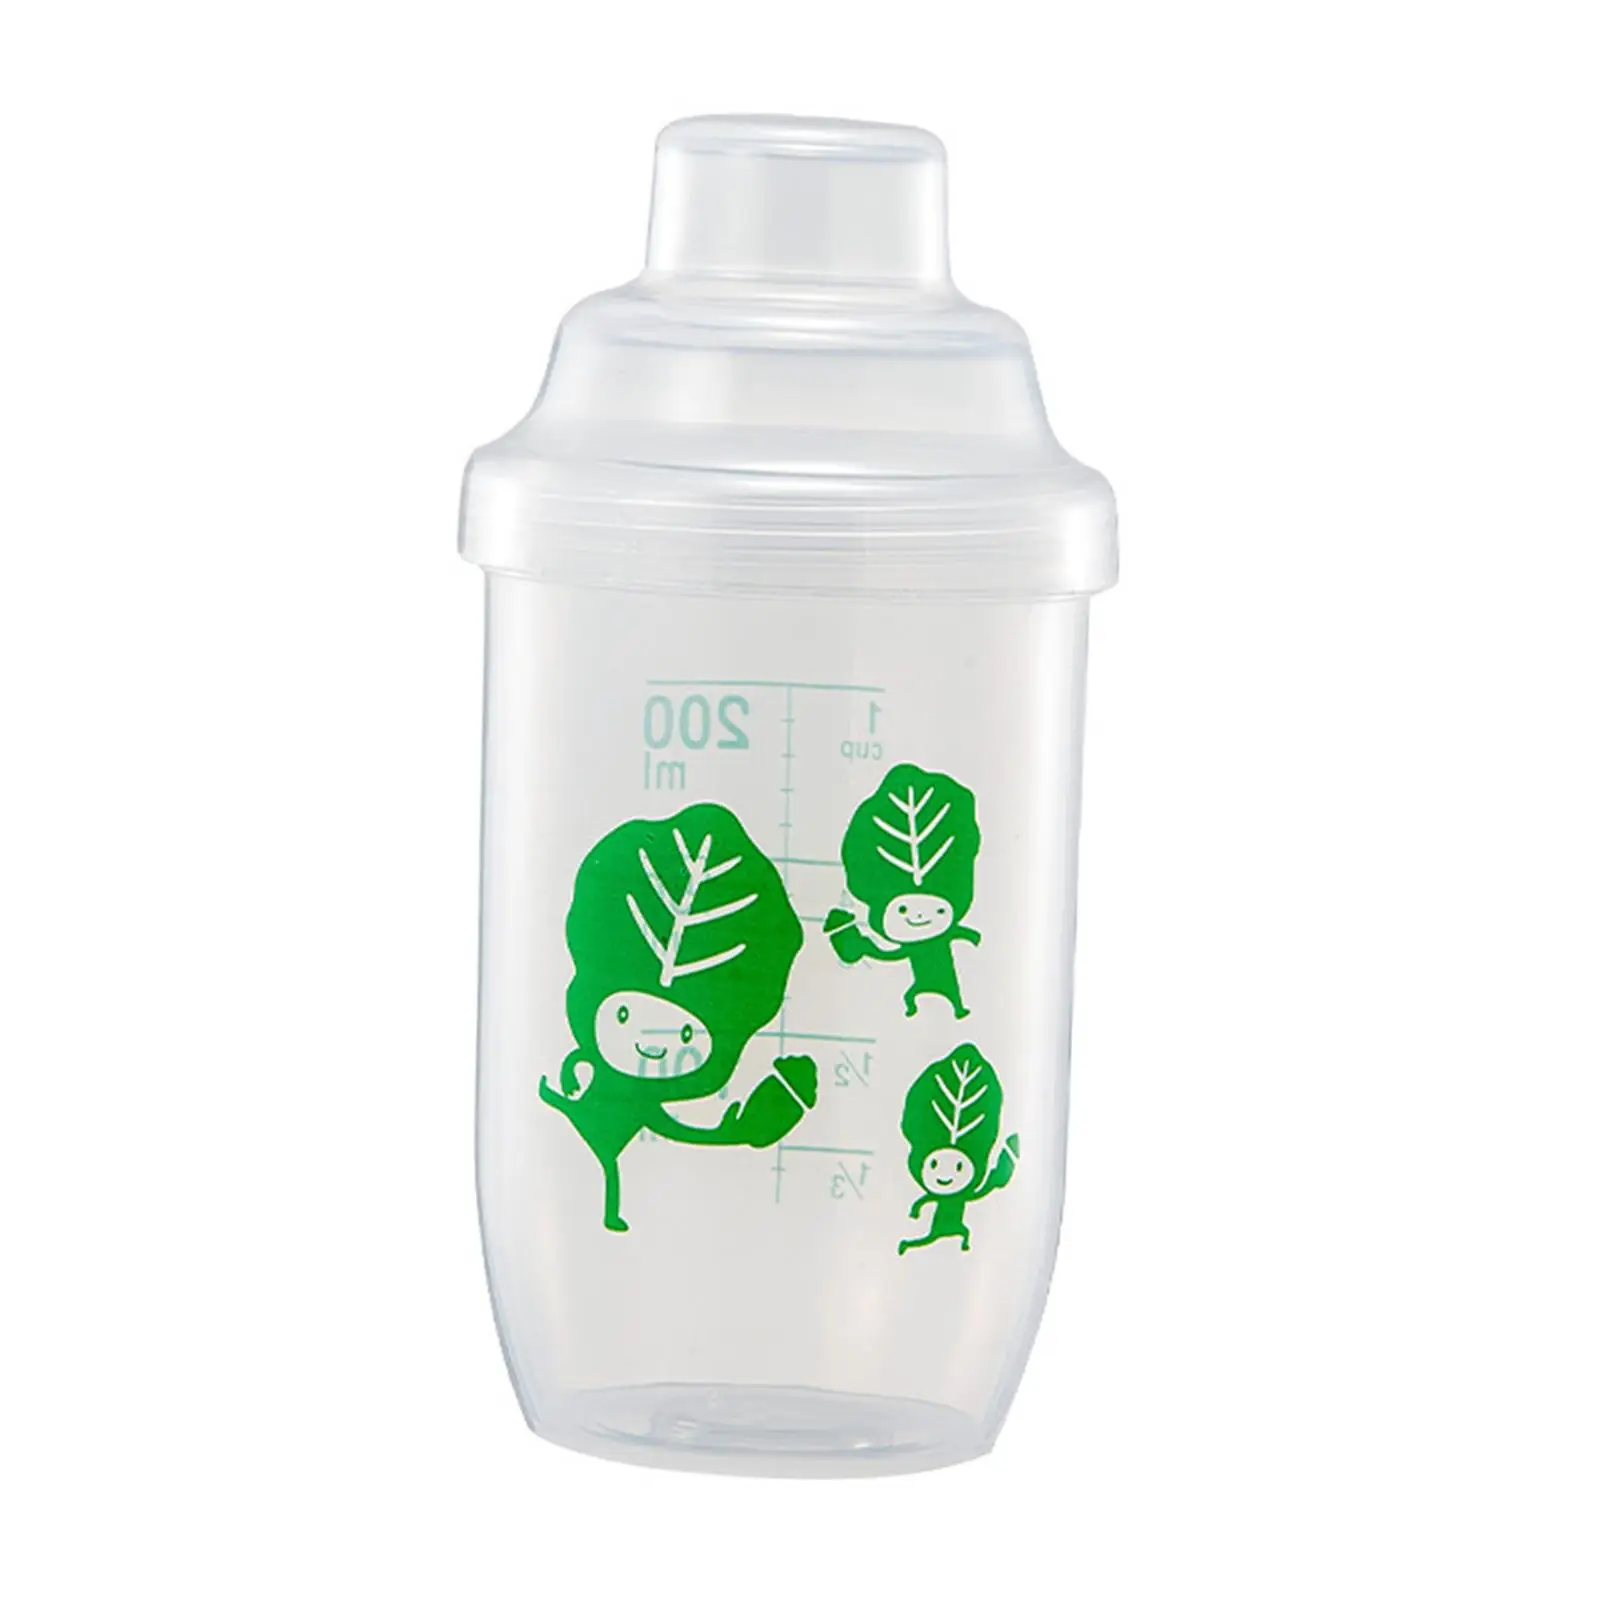 Shaker Bottle Large Mouth Water Bottle Easy to Clean Multifunctional Shaker Cups for Coffee Milk Water Milkshakes Women Men